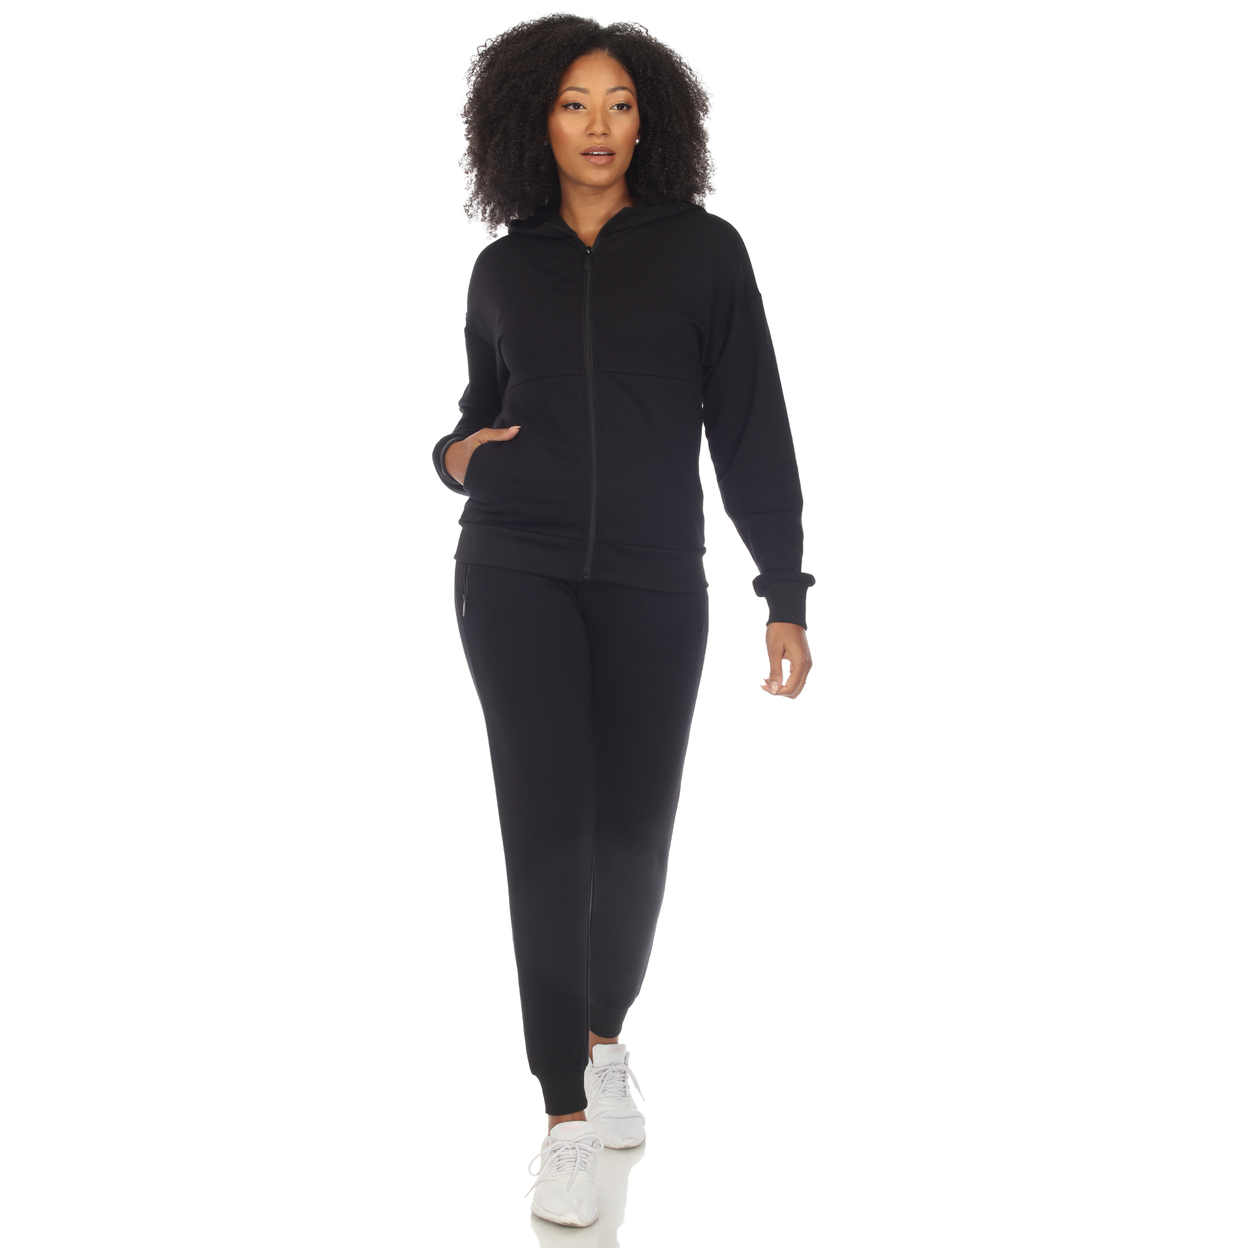 White Mark Women's 2-PC Fleece Sweatsuit Set - Black, X-large